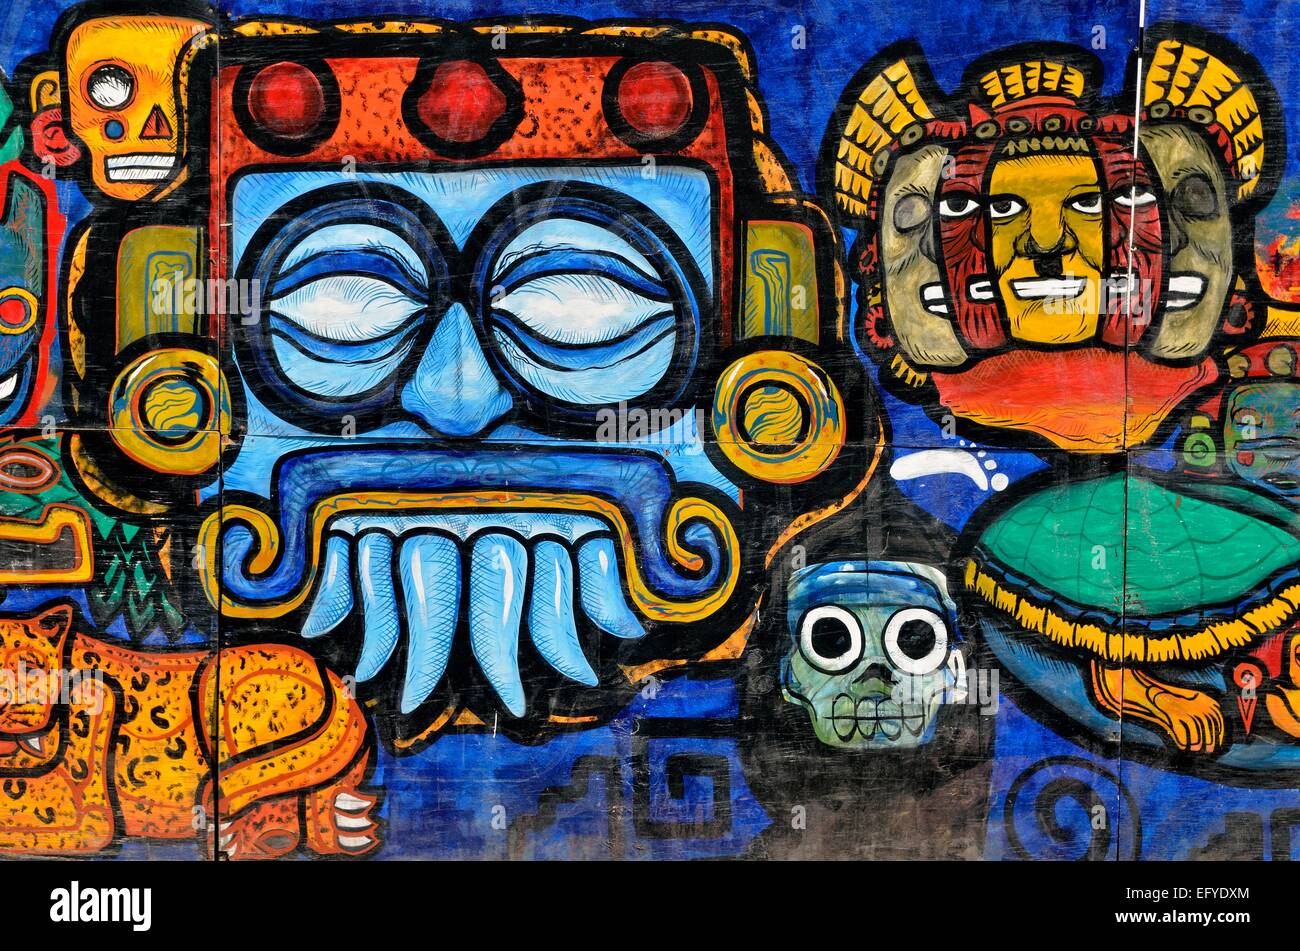 Masks, graffiti painting on a hoarding, Mexico City, Mexico Stock Photo